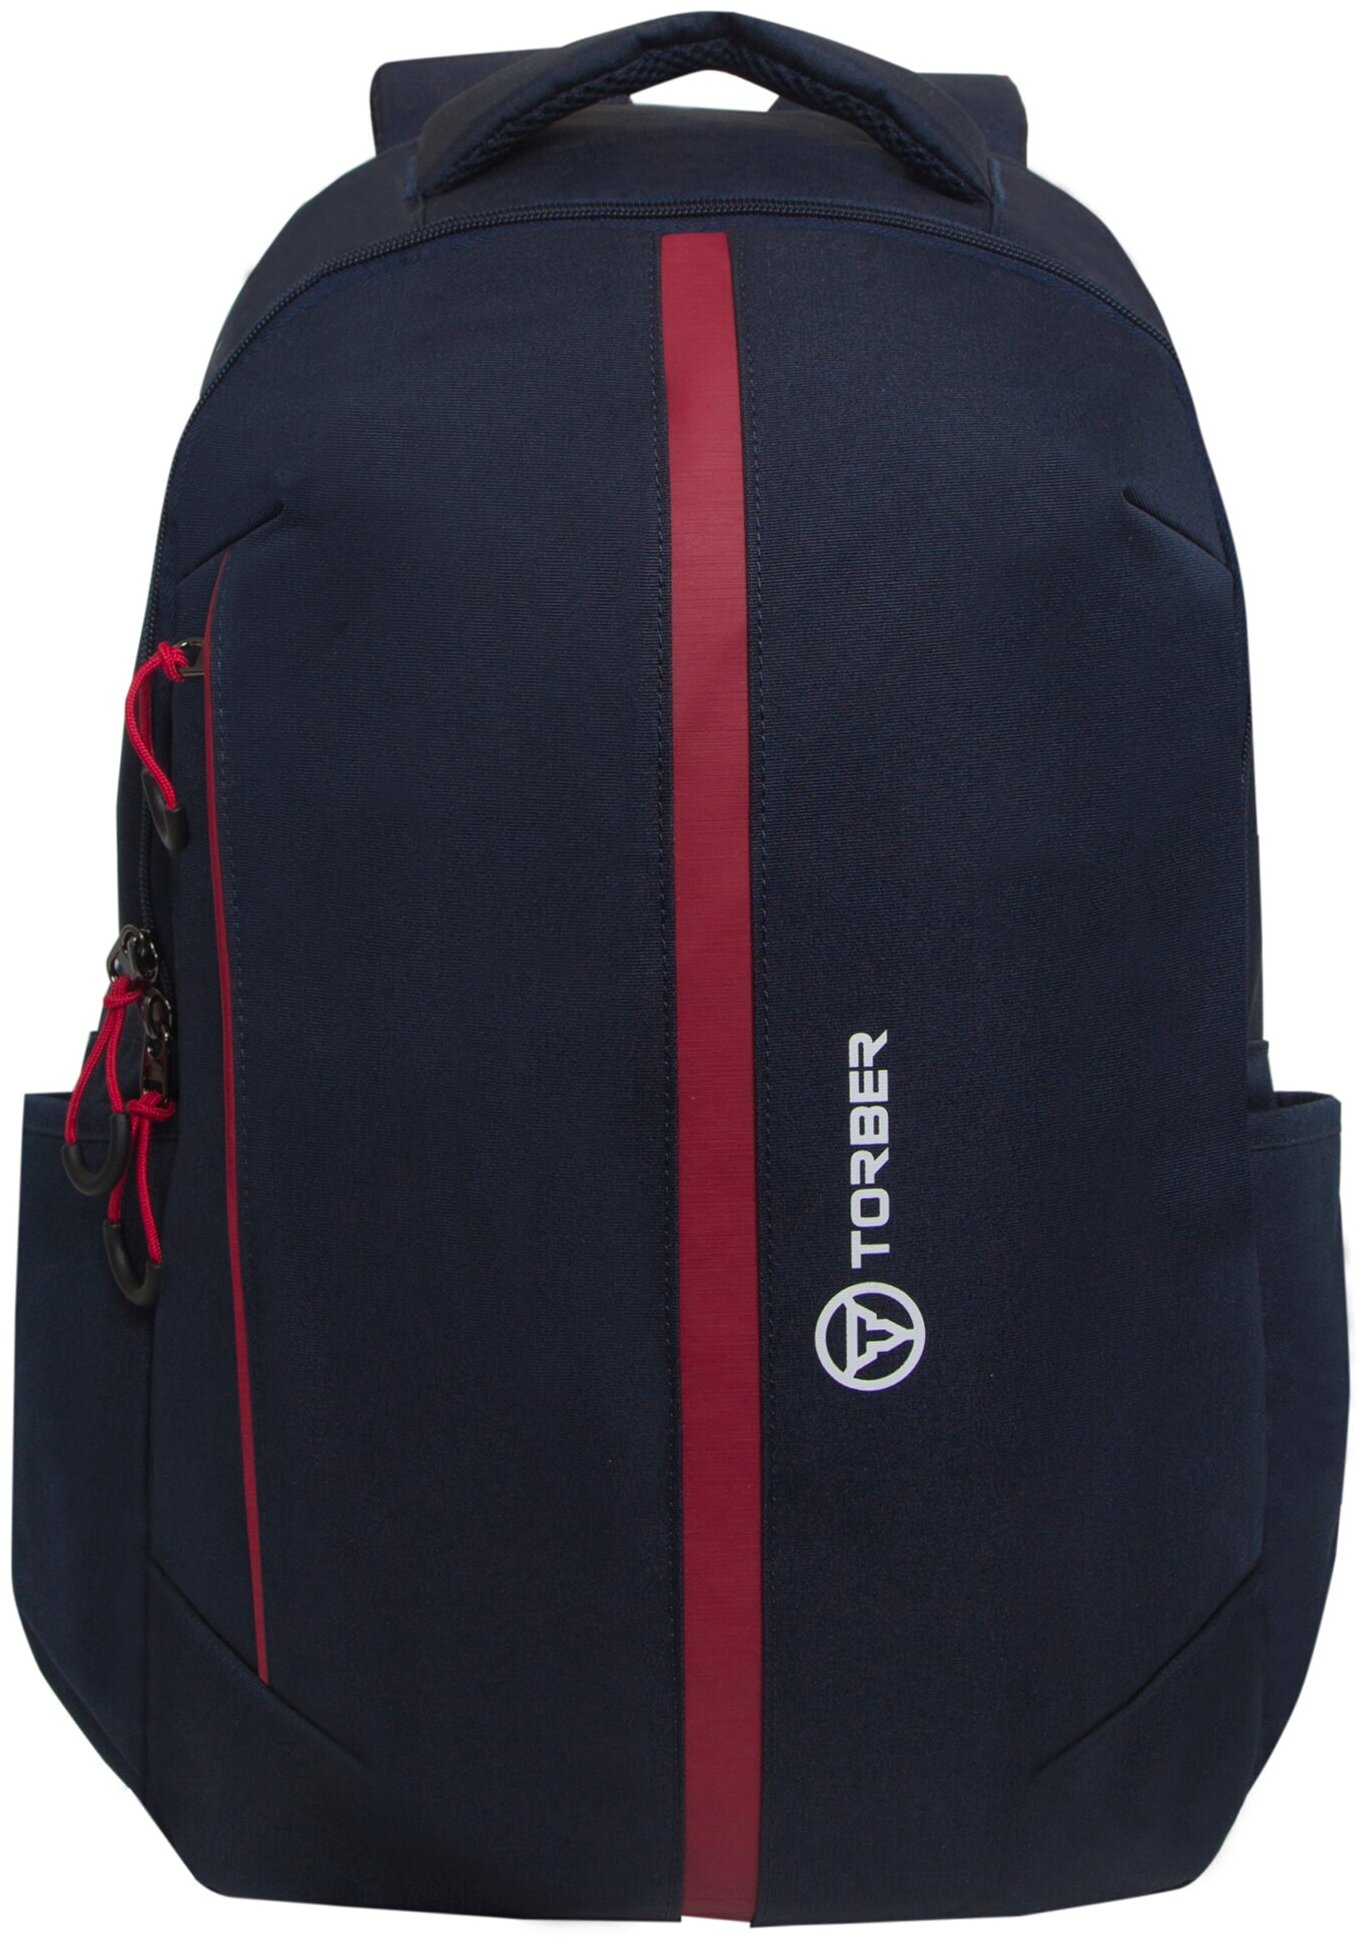 Рюкзак TORBER FORGRAD 2.0 с отделением для ноутбука 15,6", синий, полиэстер меланж, 46 х 31 x 17 см TORBER MR-T9281-BLU